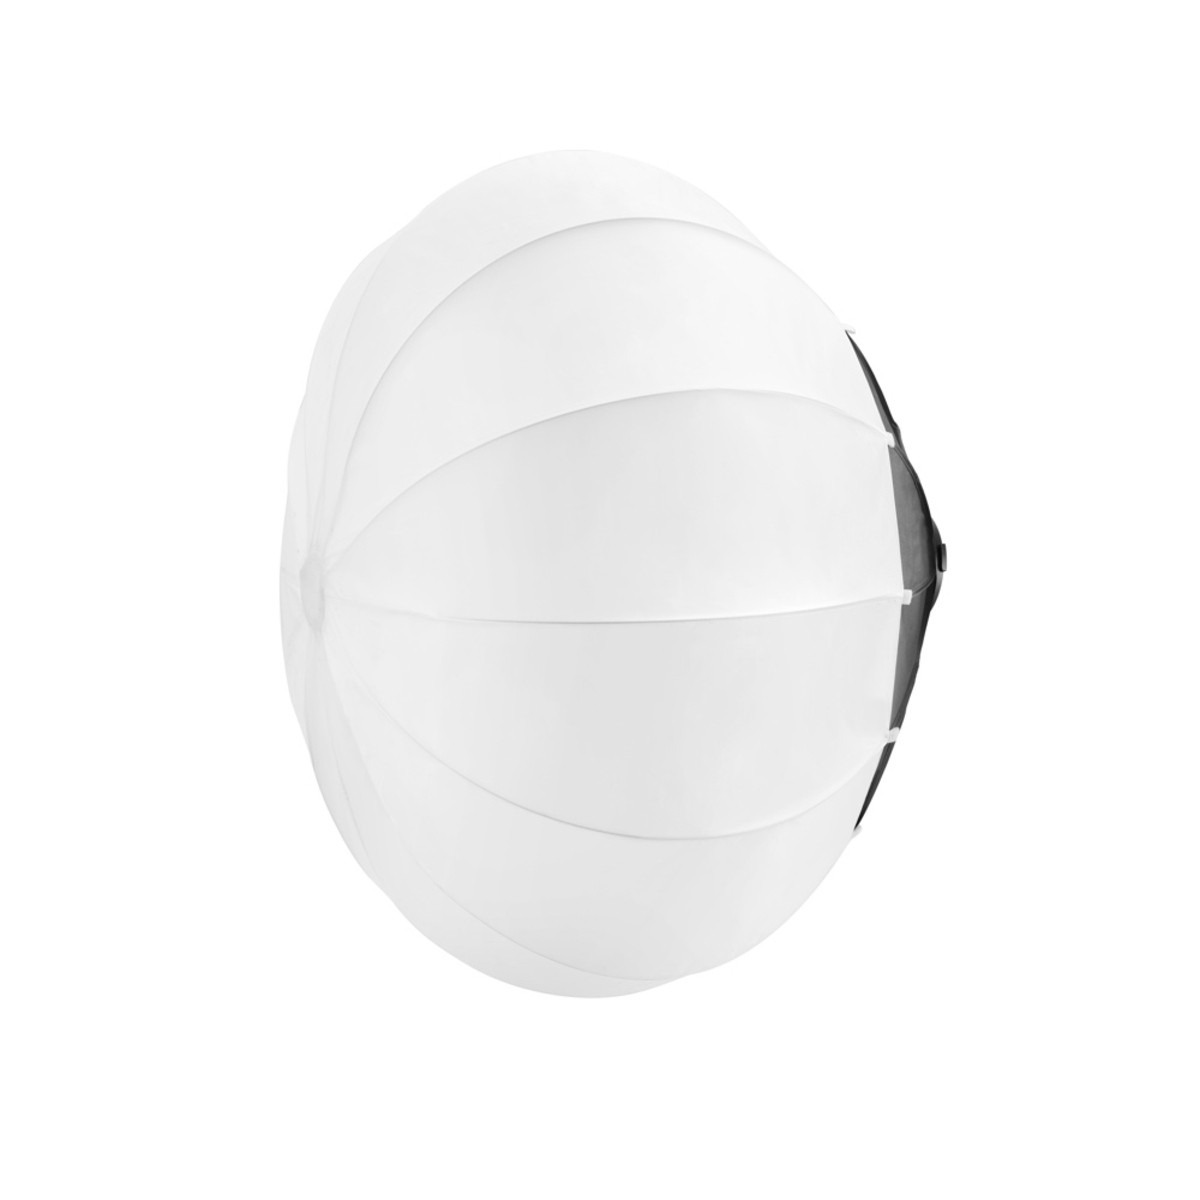 Godox GL4 Lantern Softbox 120cm for KNOWLED MG1200Bi Bi-Color LED Light